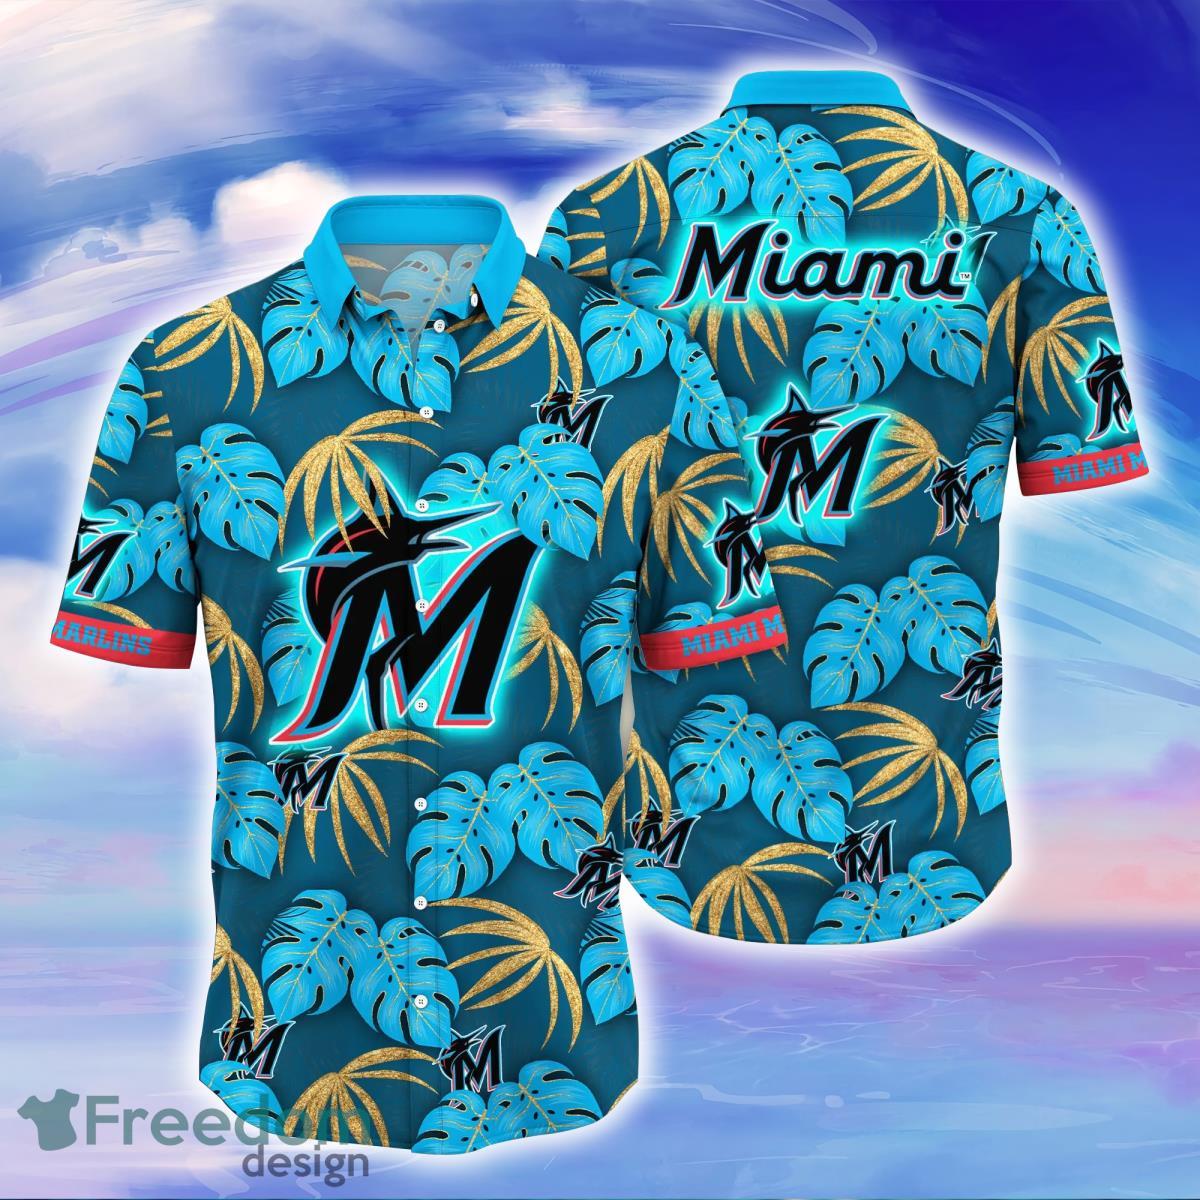 Miami Marlins MLB Flower Hawaiian Shirt Special Gift For Fans -  Freedomdesign